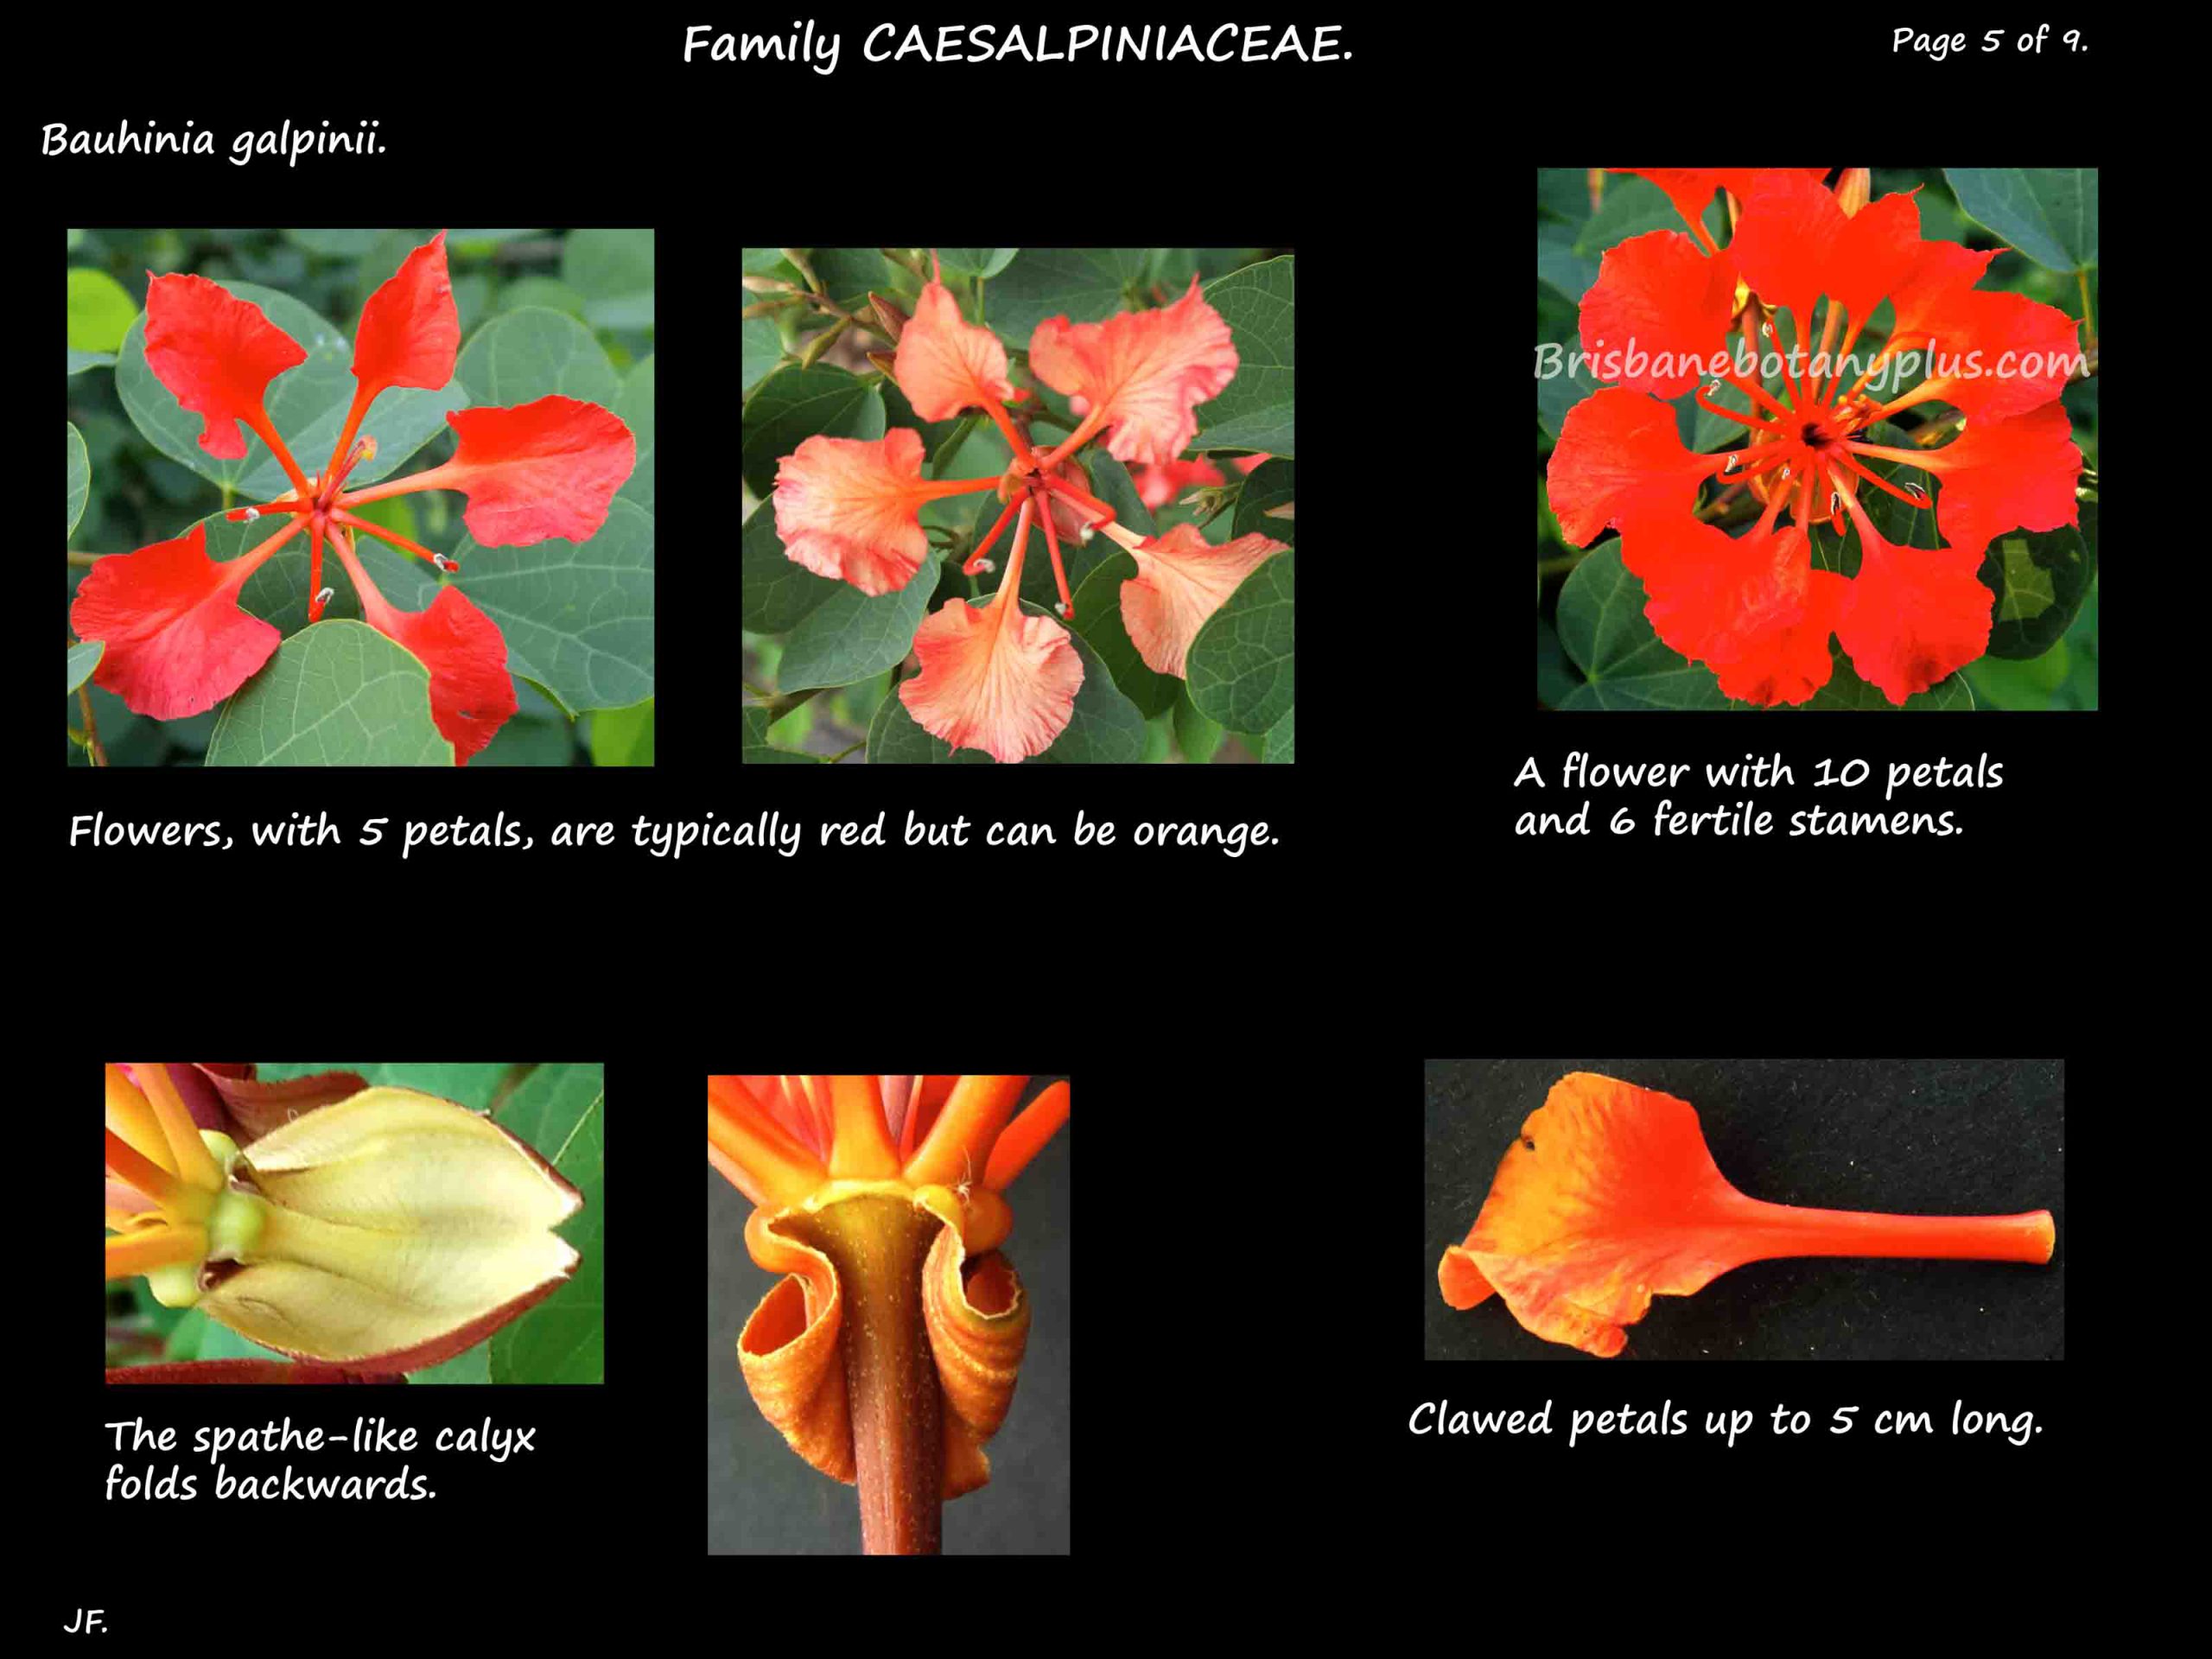 5 Bauhinia galpinii flowers